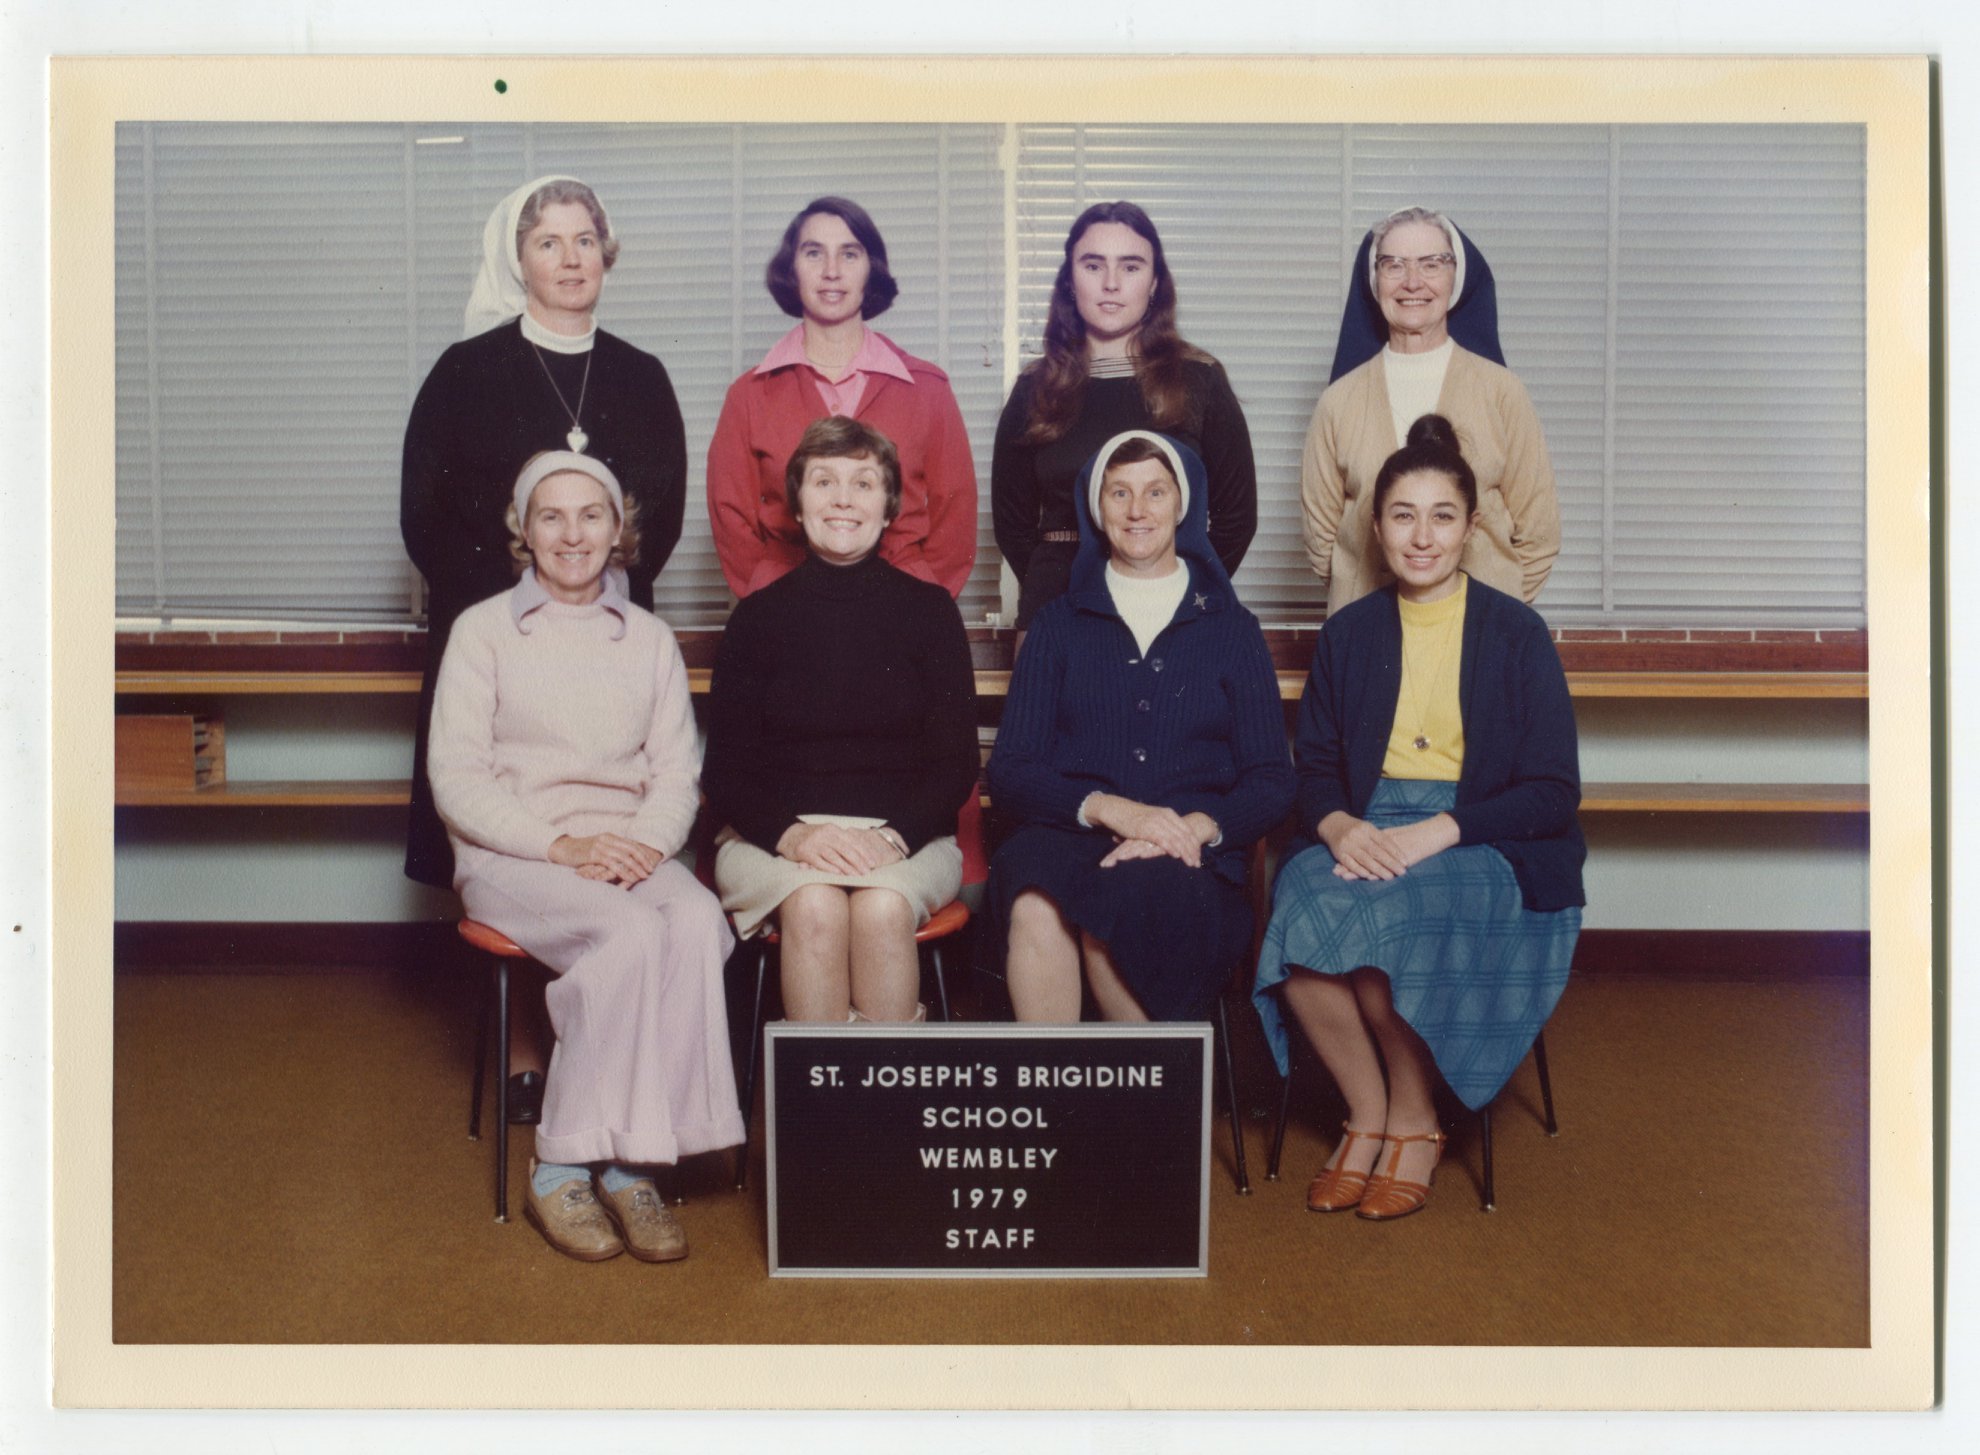  1979 - St Joseph’s Brigidine Primary School staff Dorothea Hickey back left. 